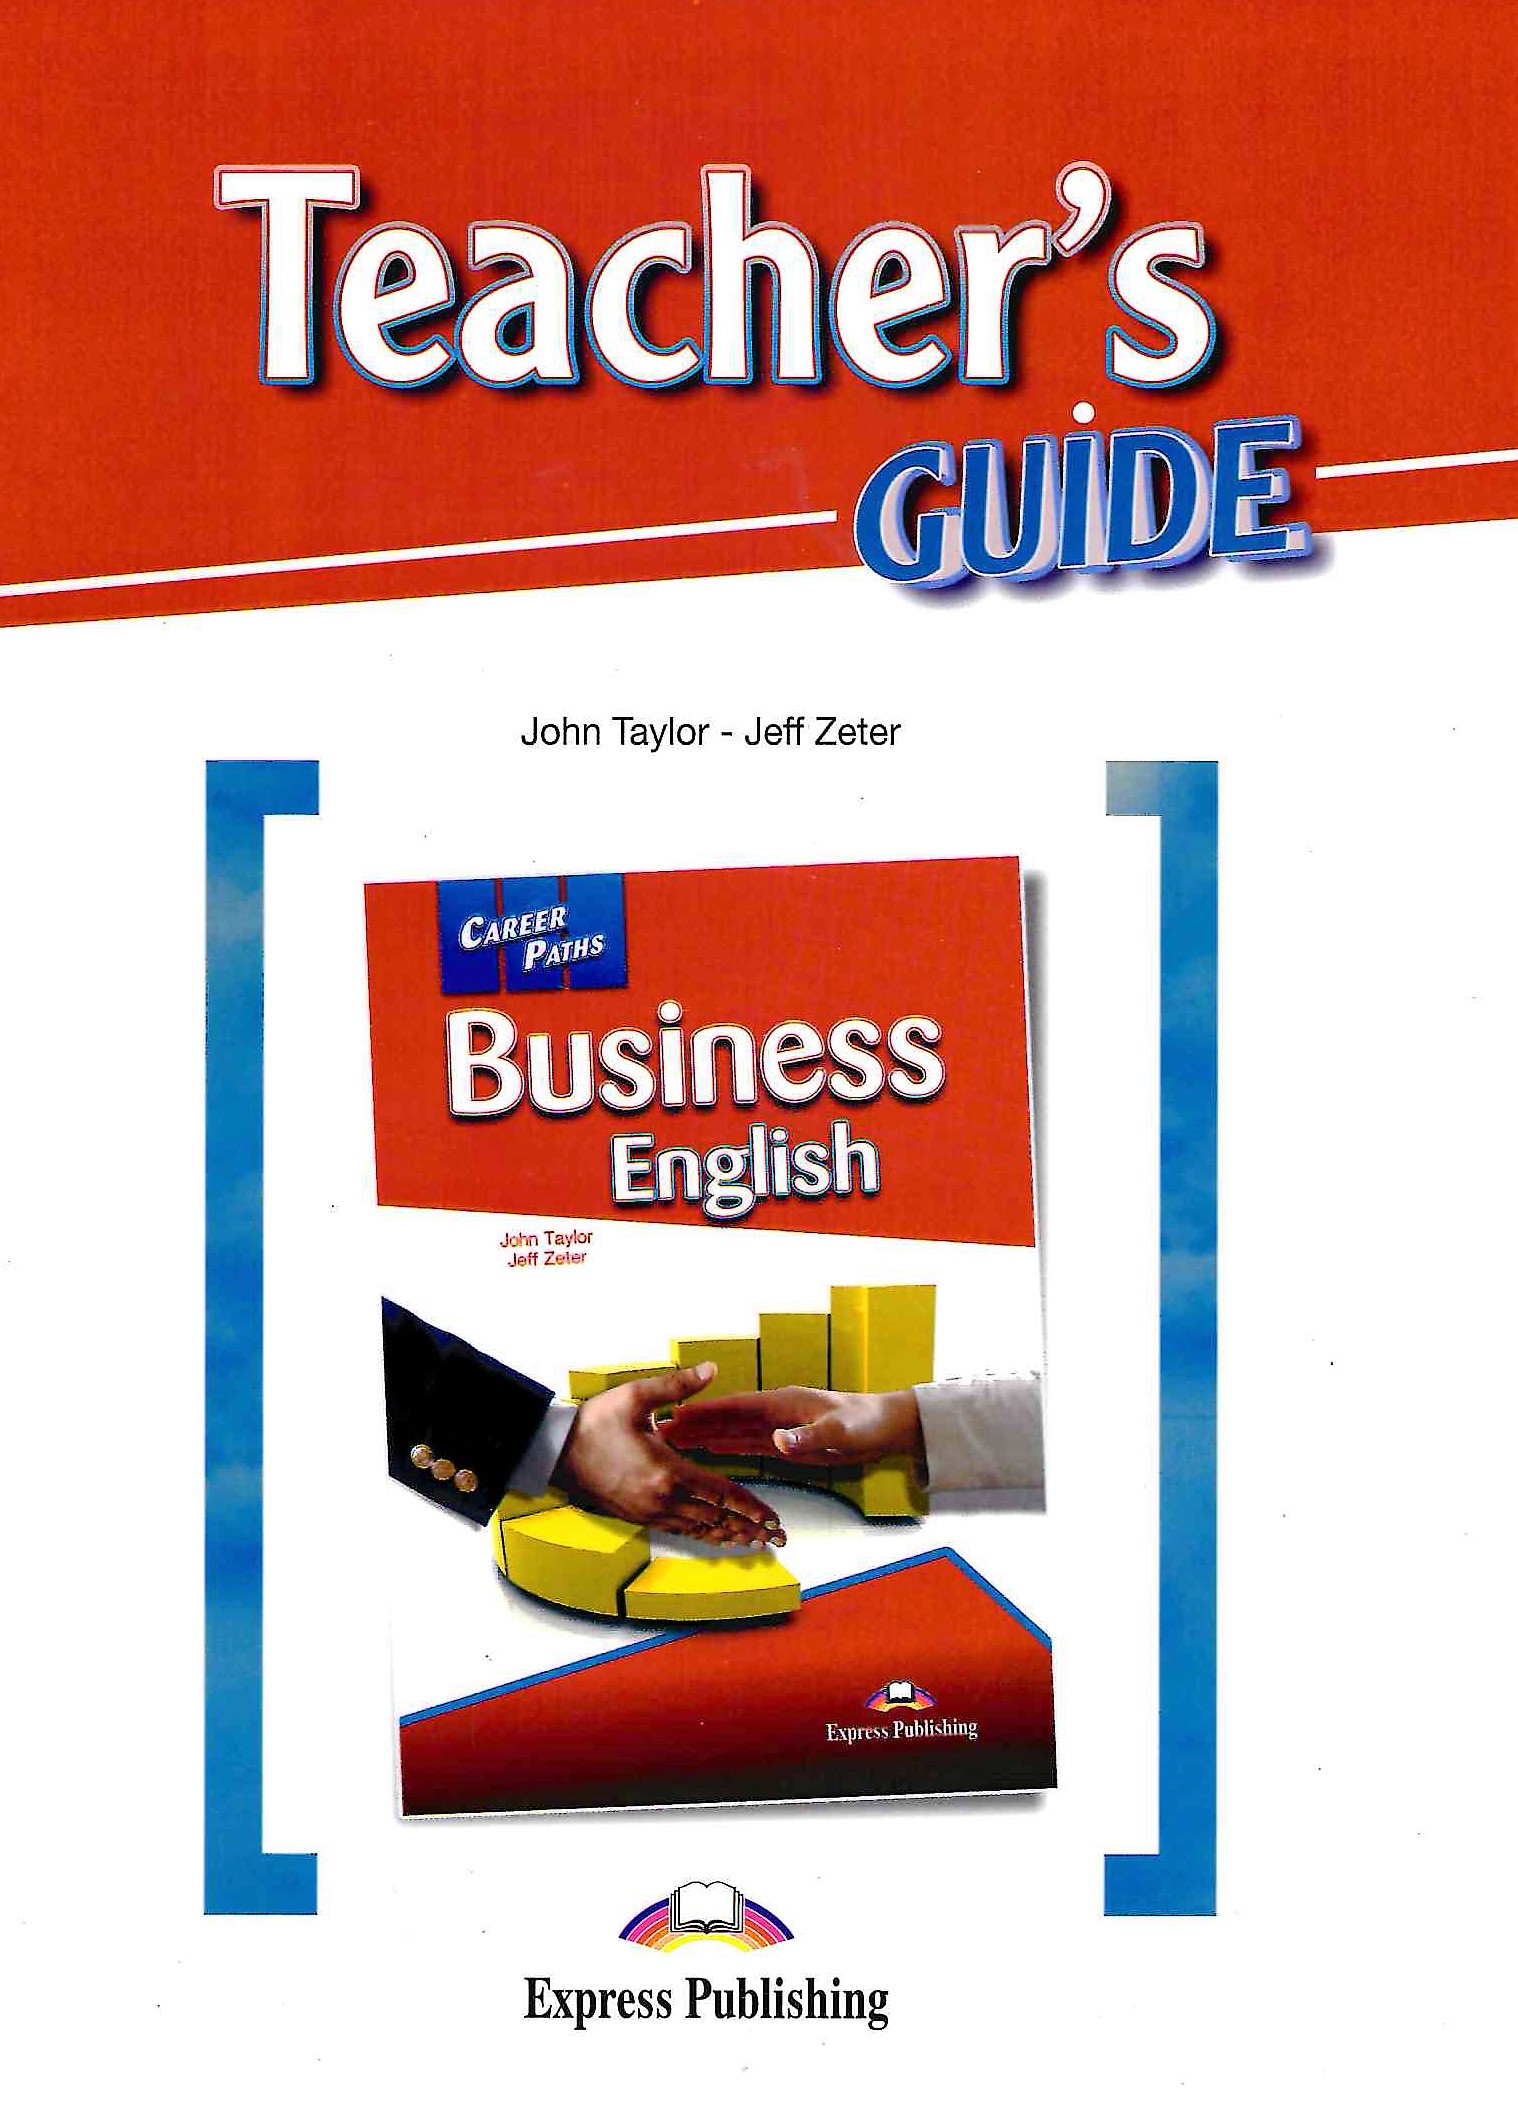 English teachers tests. Career Paths English Business учебник. Business English учебник John Taylor. Business English учебник Express Publishing. Business English учебник teacher book.